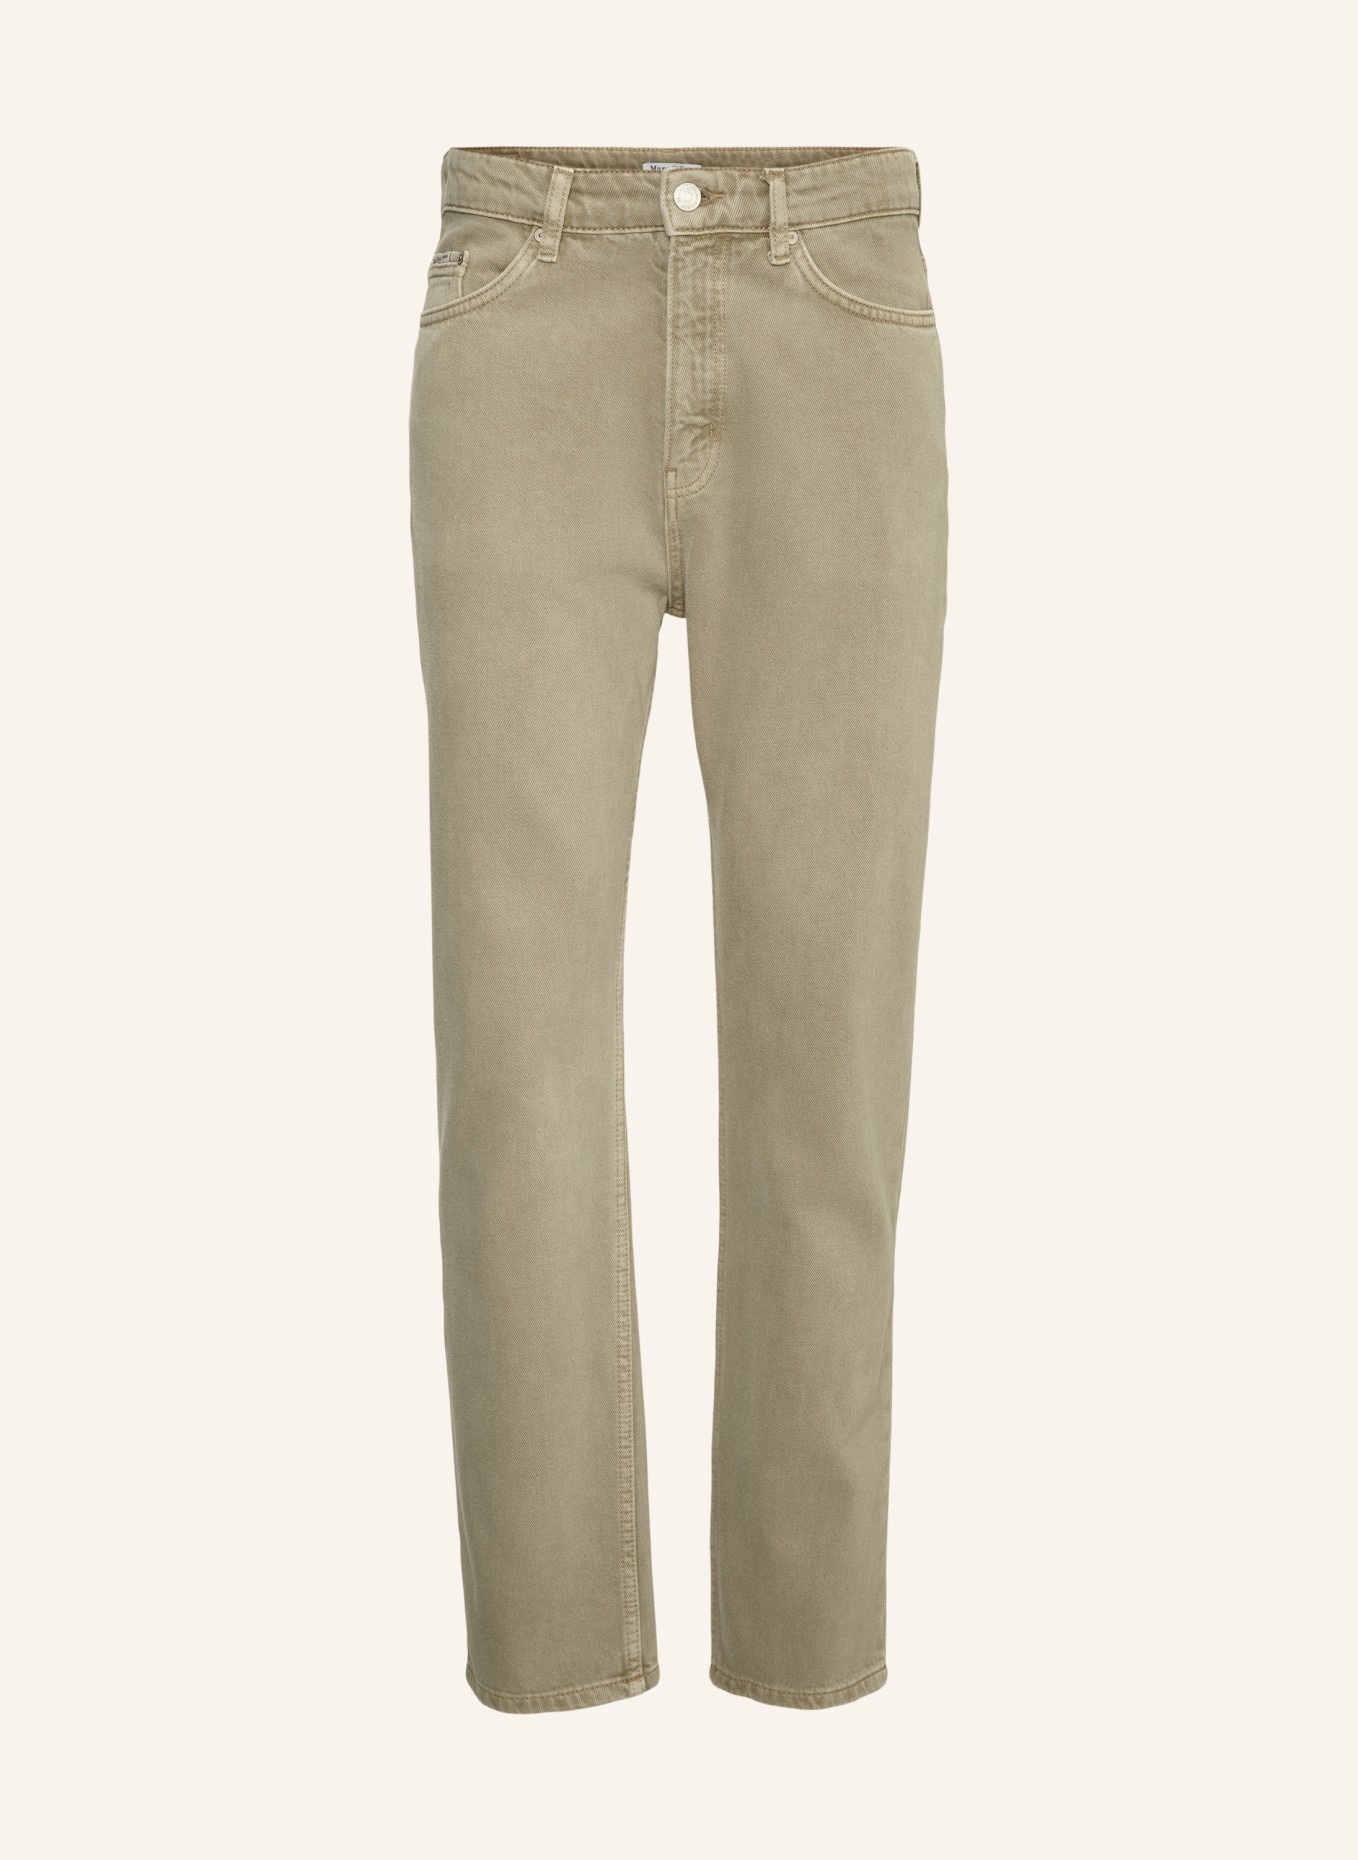 Marc O'Polo DENIM Jeans Modell SVERRE STRAIGHT, Farbe: BEIGE (Bild 1)